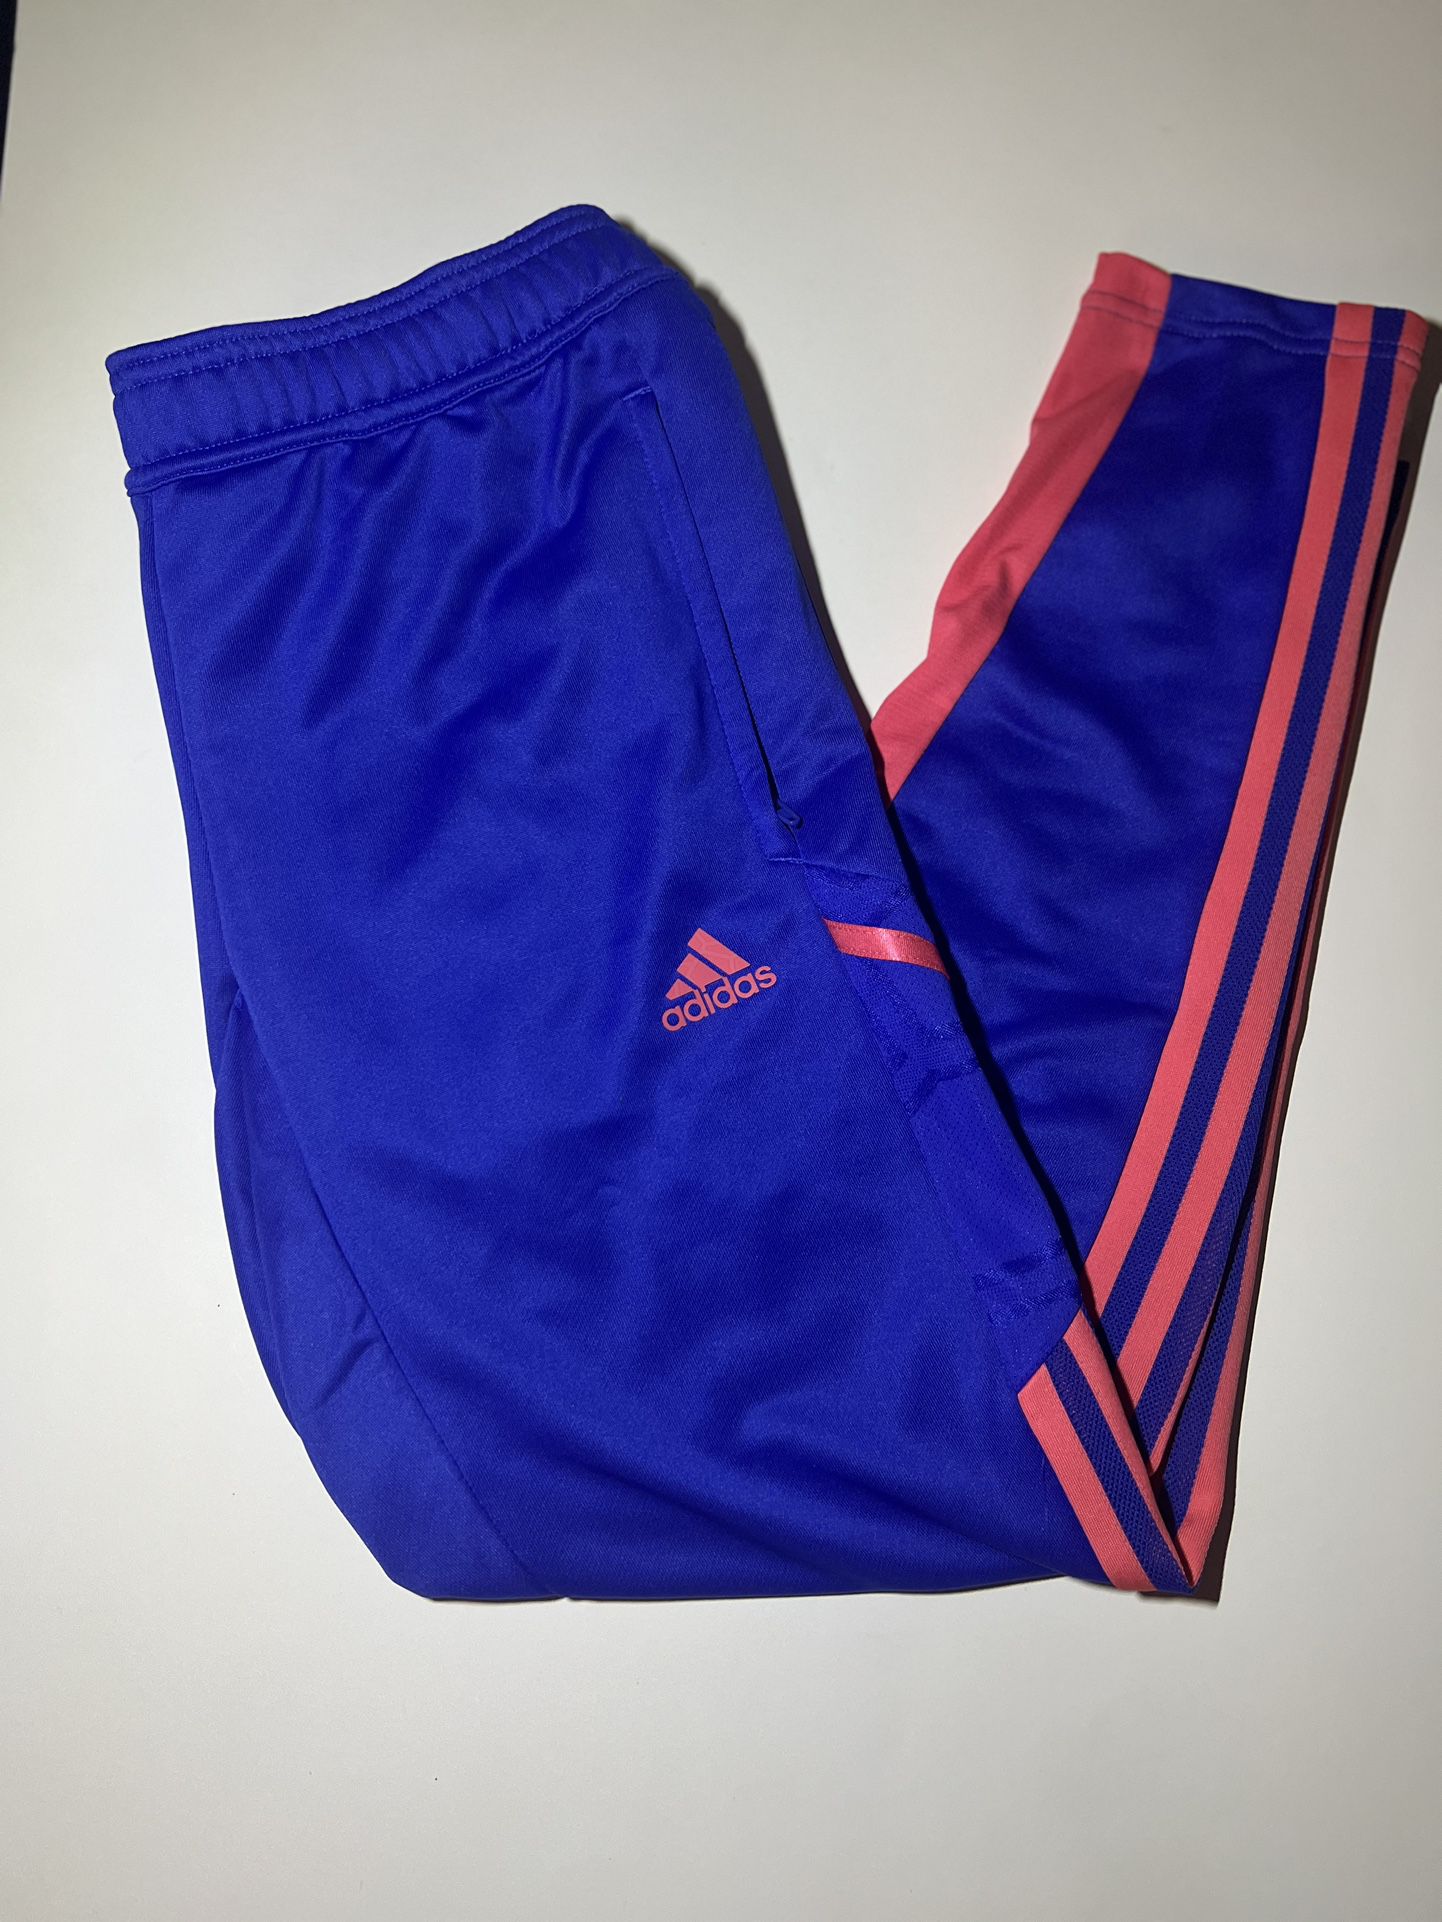 Adidas - Men’s Tiro Pants